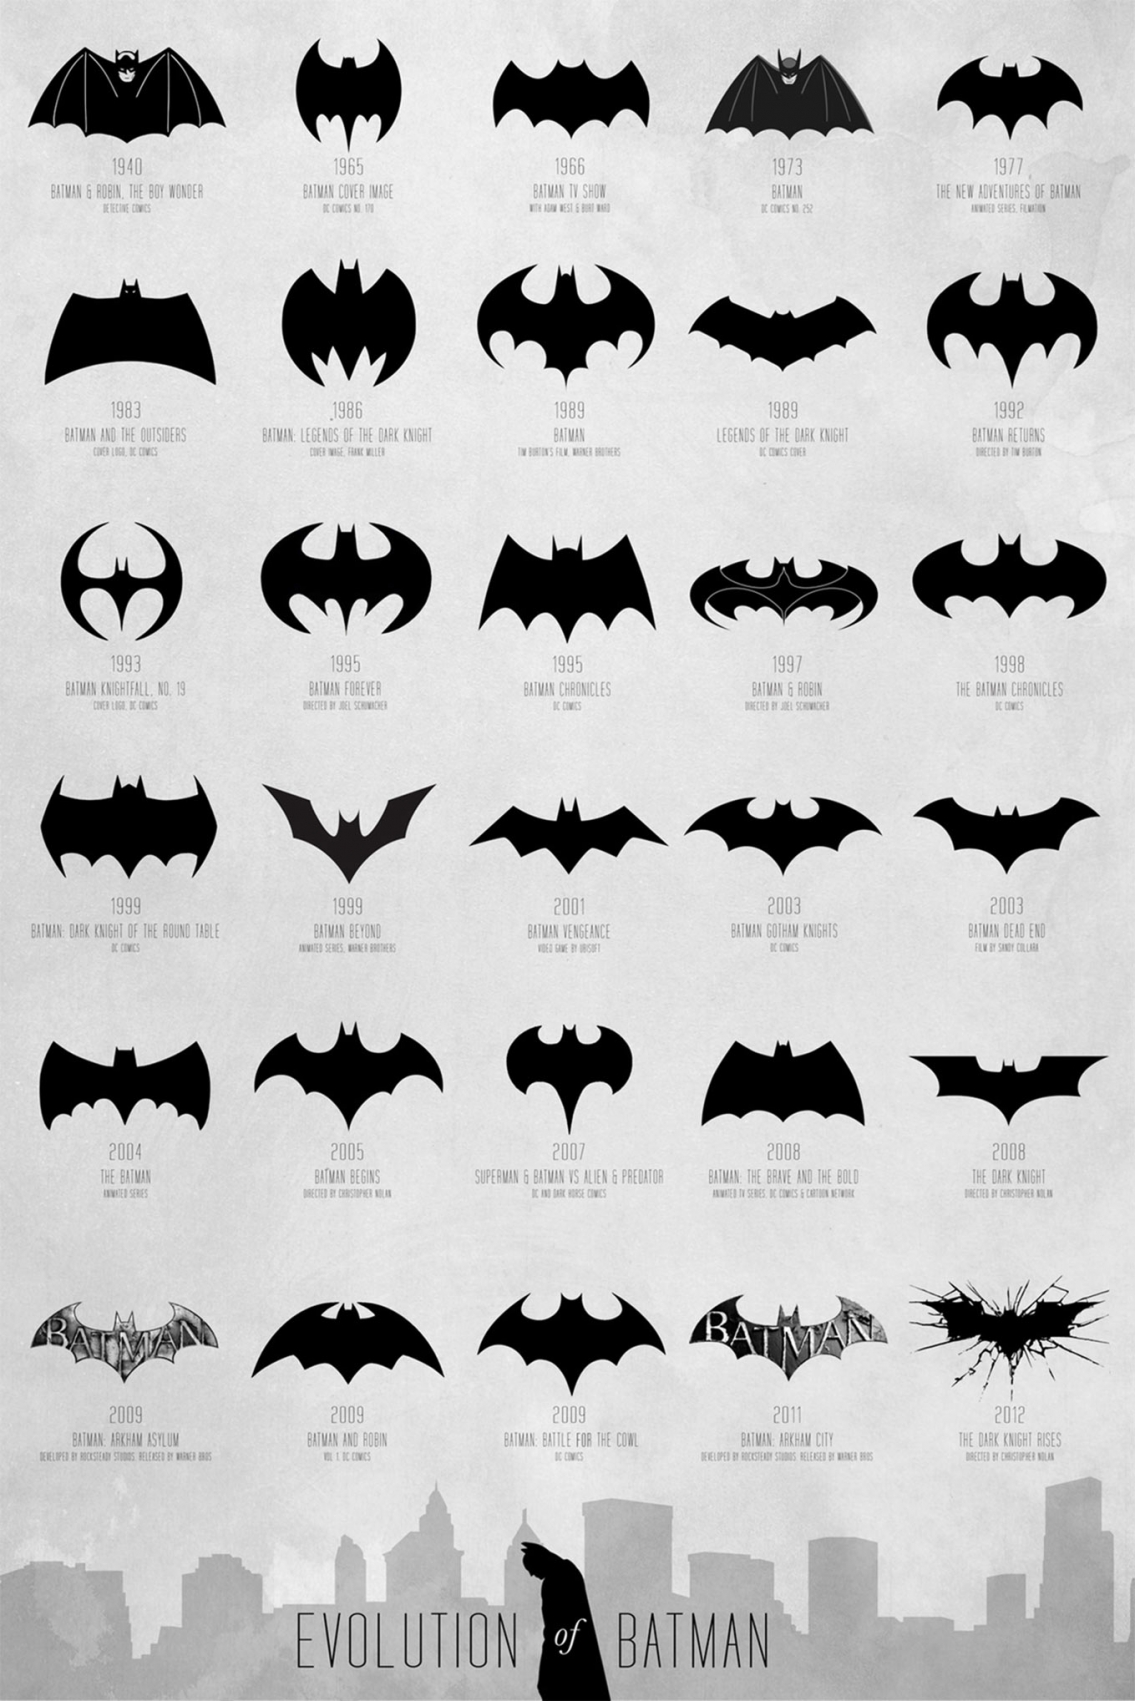 Evolution Of The Batman Logo Infographic